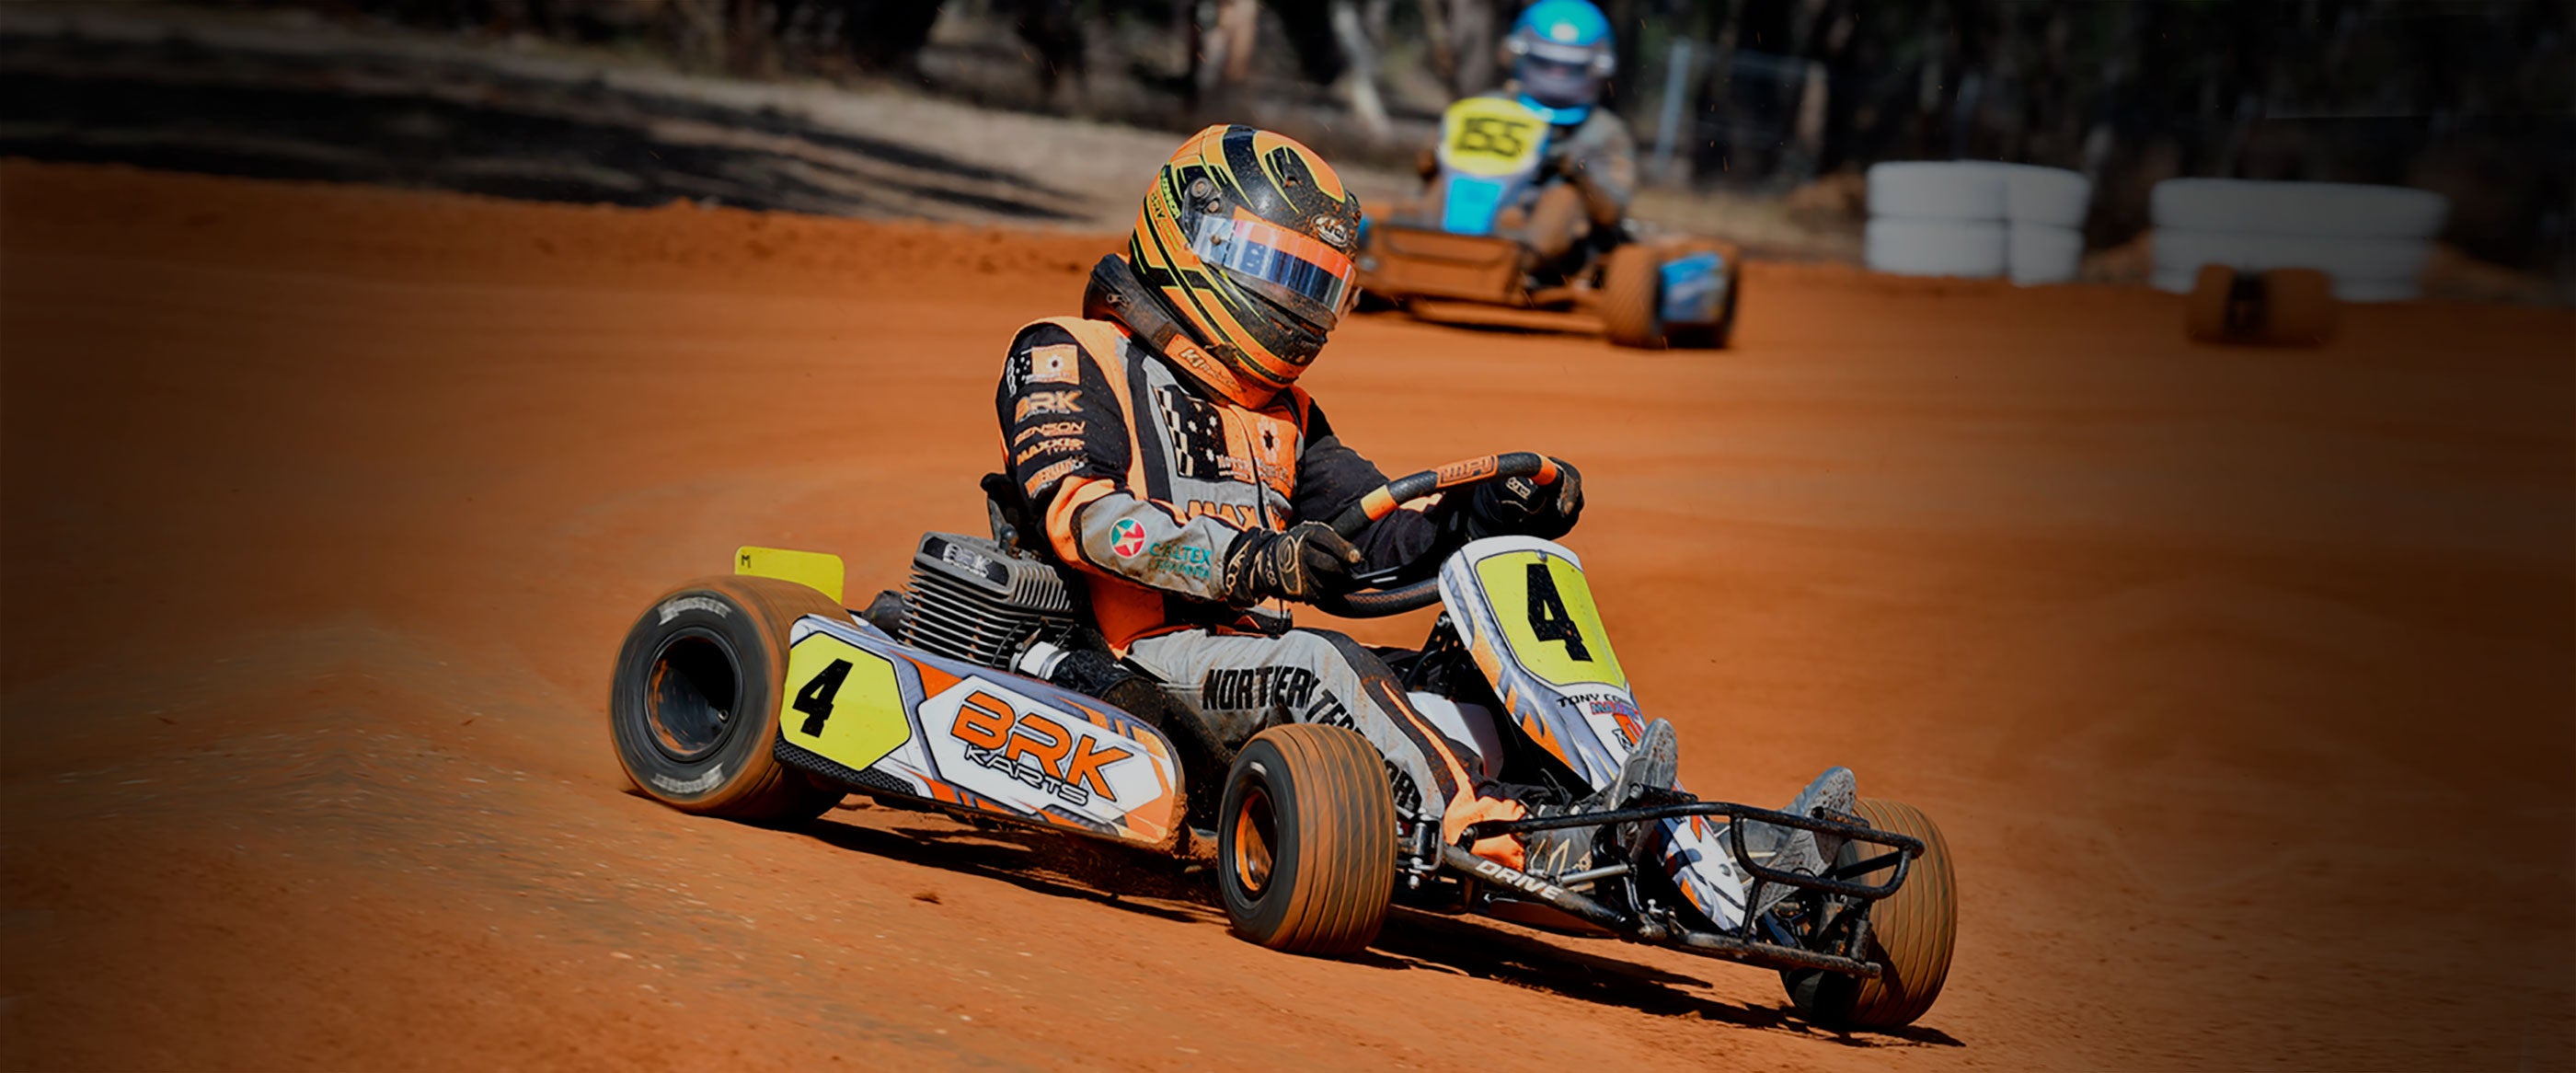 Speedway Kart Racing | Dirt Kart Racing | Australia